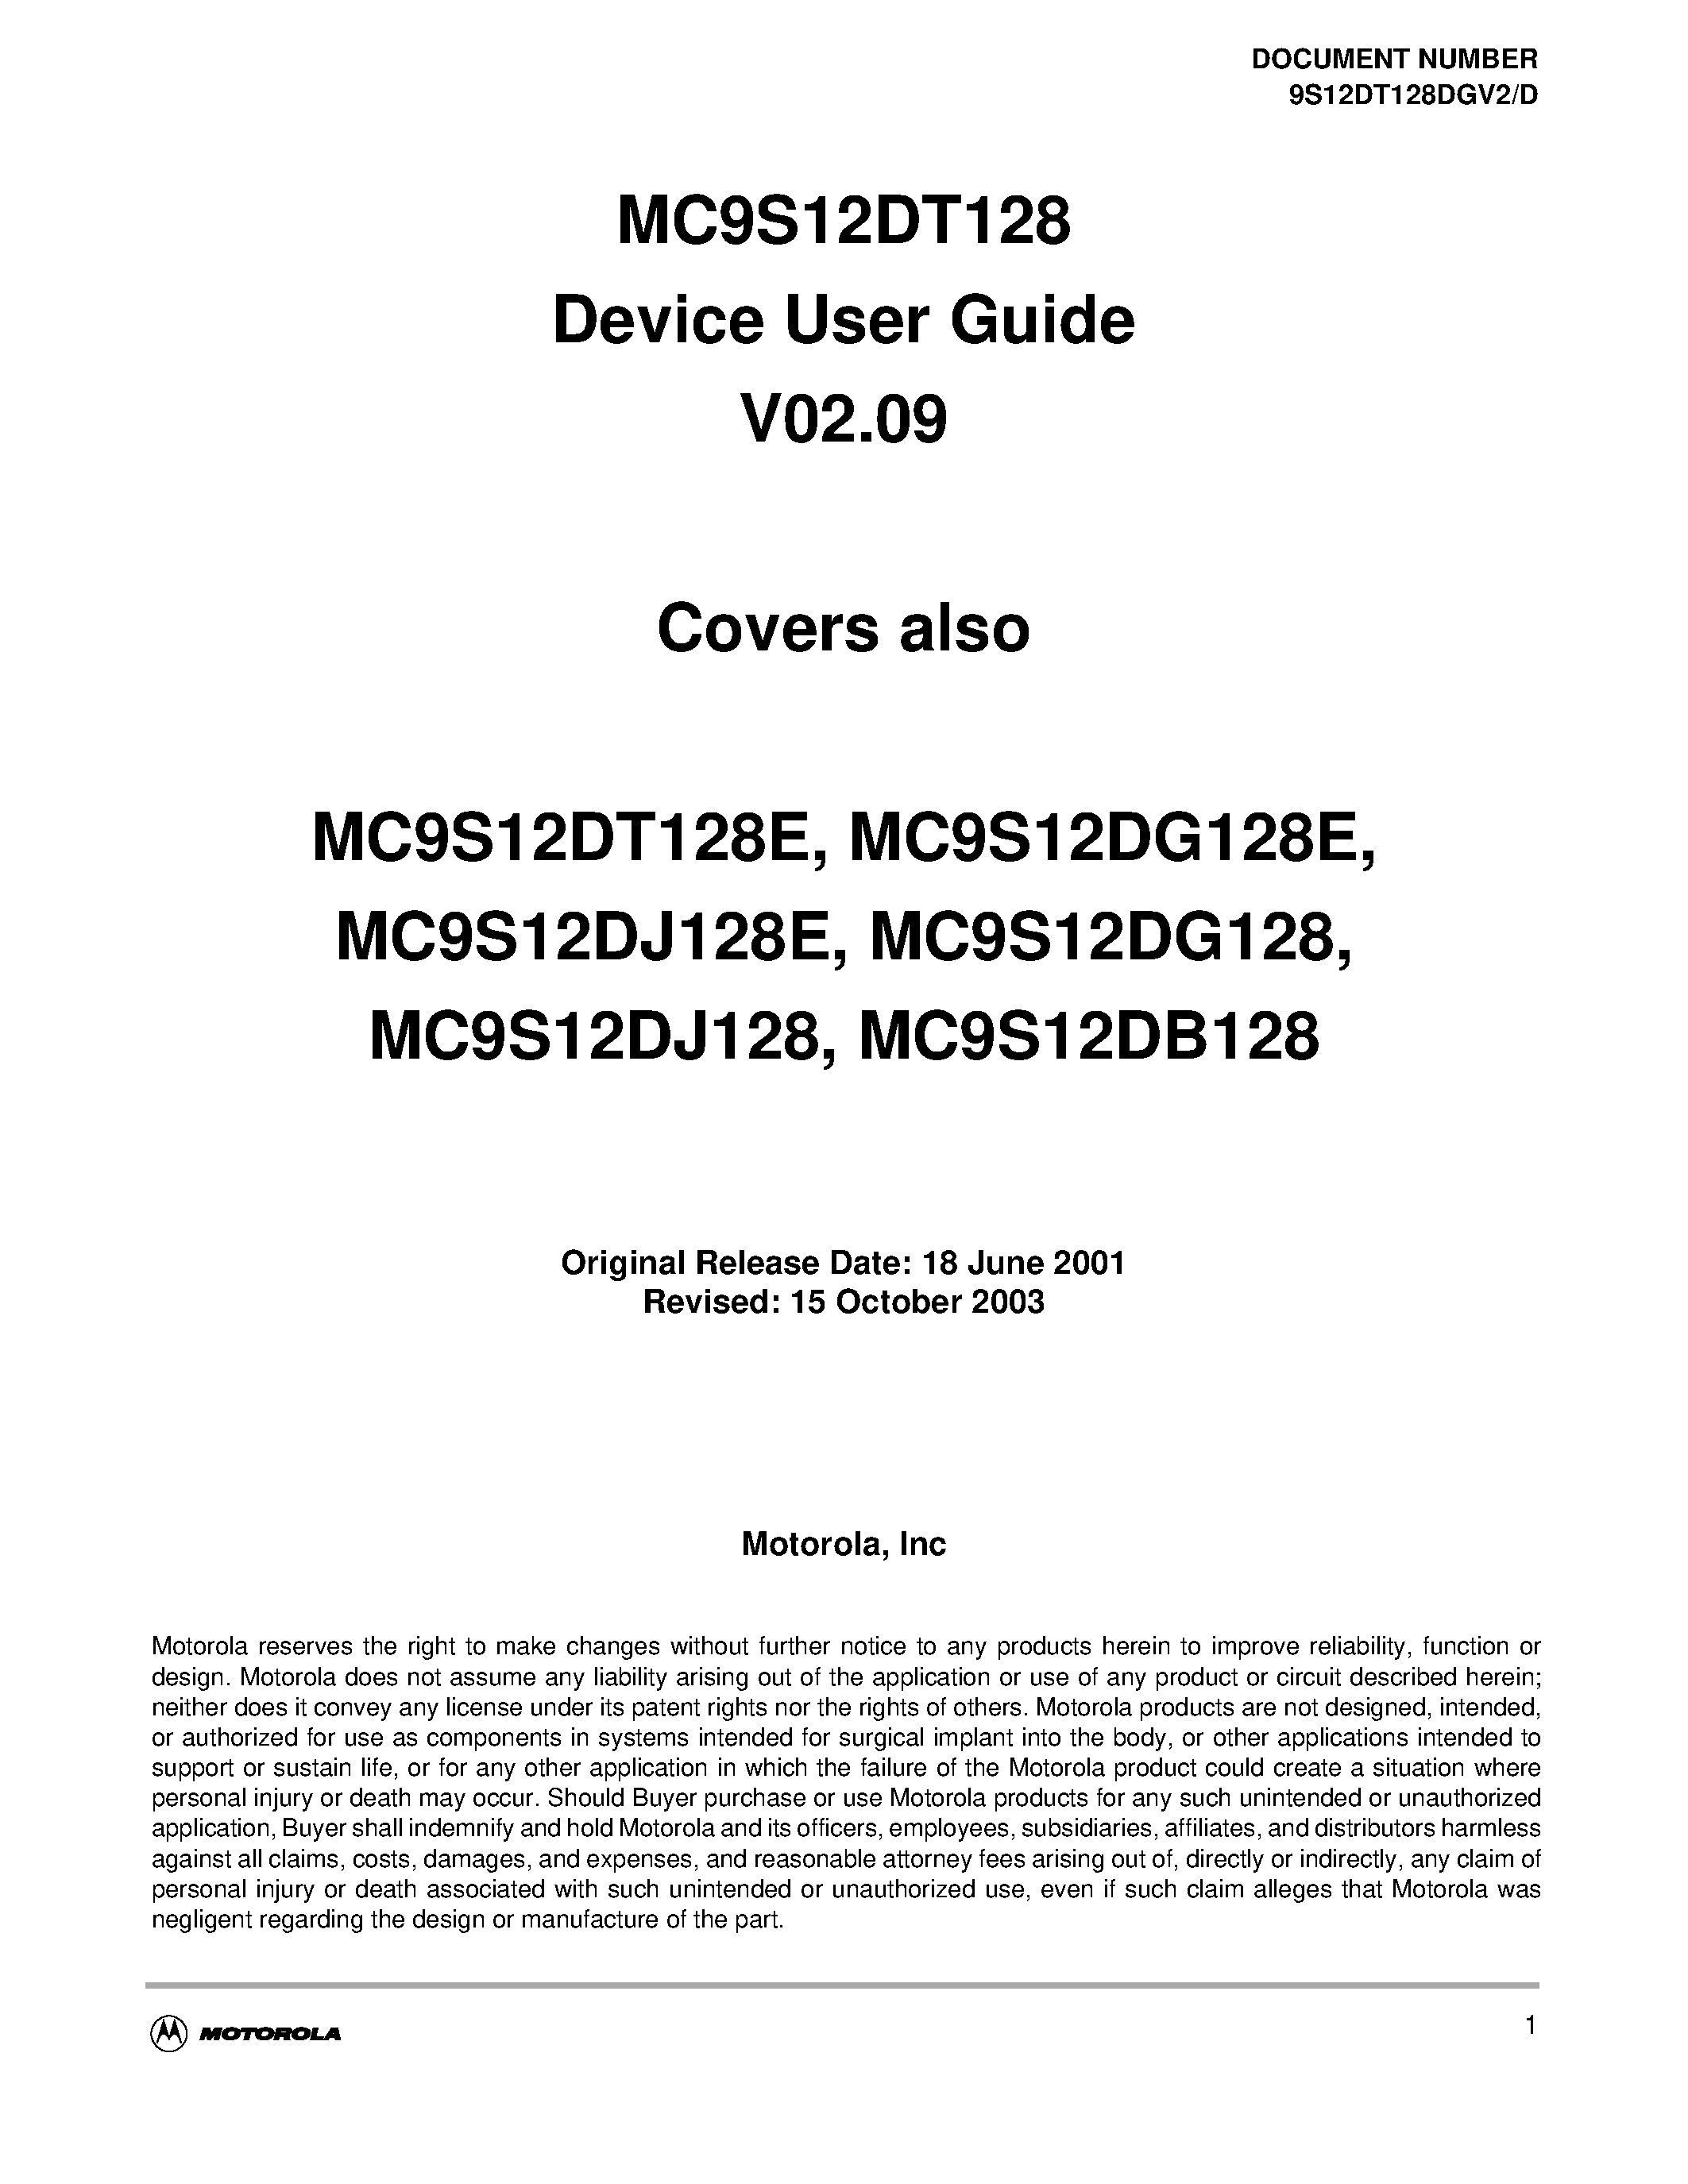 Даташит S12MEBIV3D - MC9S12DT128 Device User Guide V02.09 страница 1